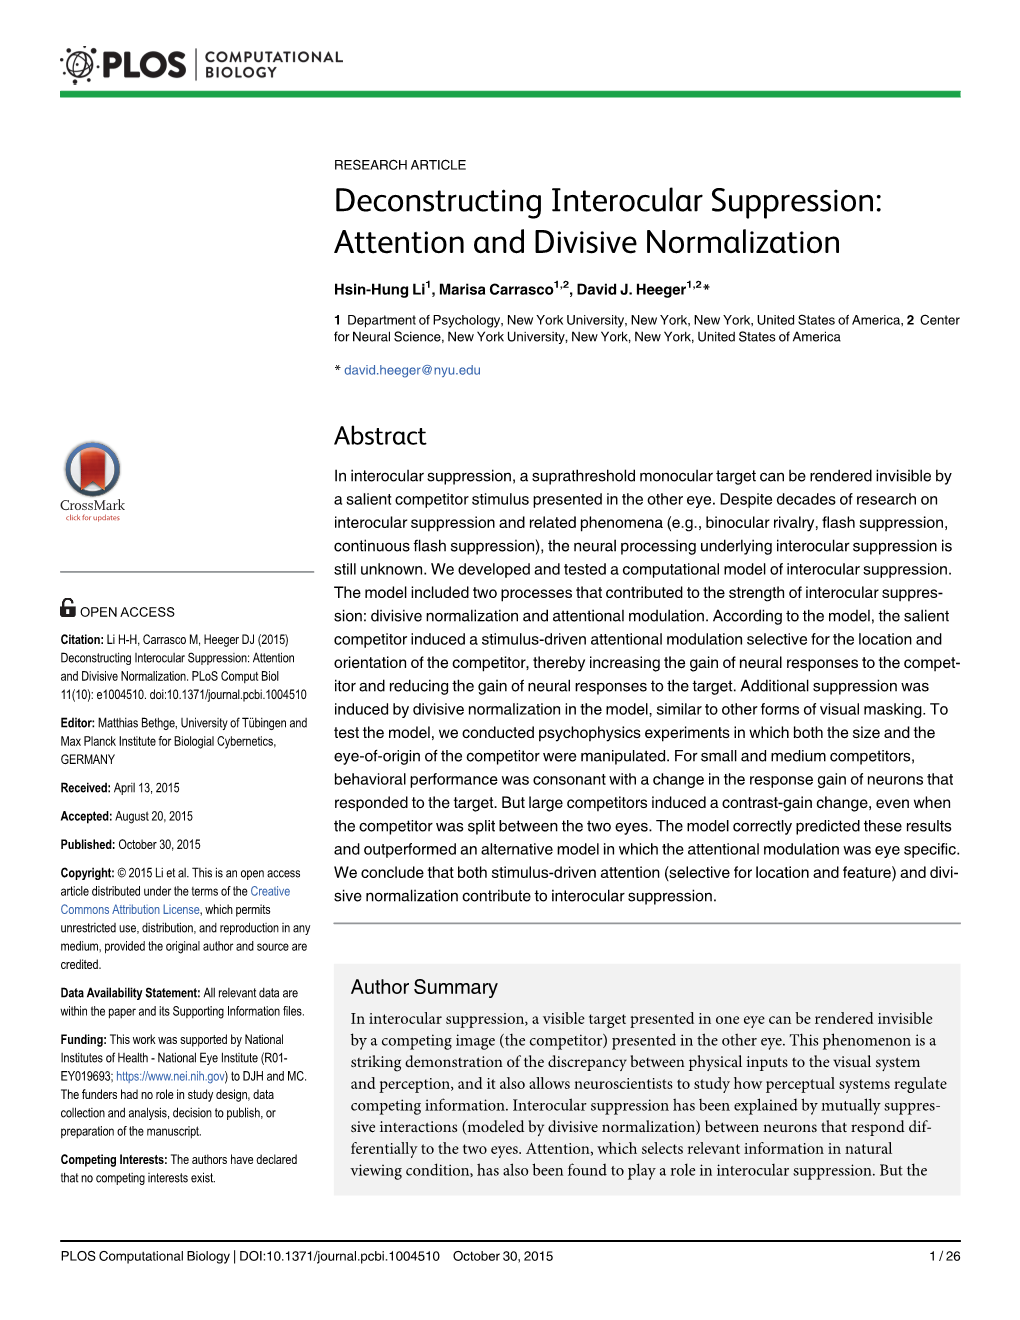 Deconstructing Interocular Suppression: Attention and Divisive Normalization